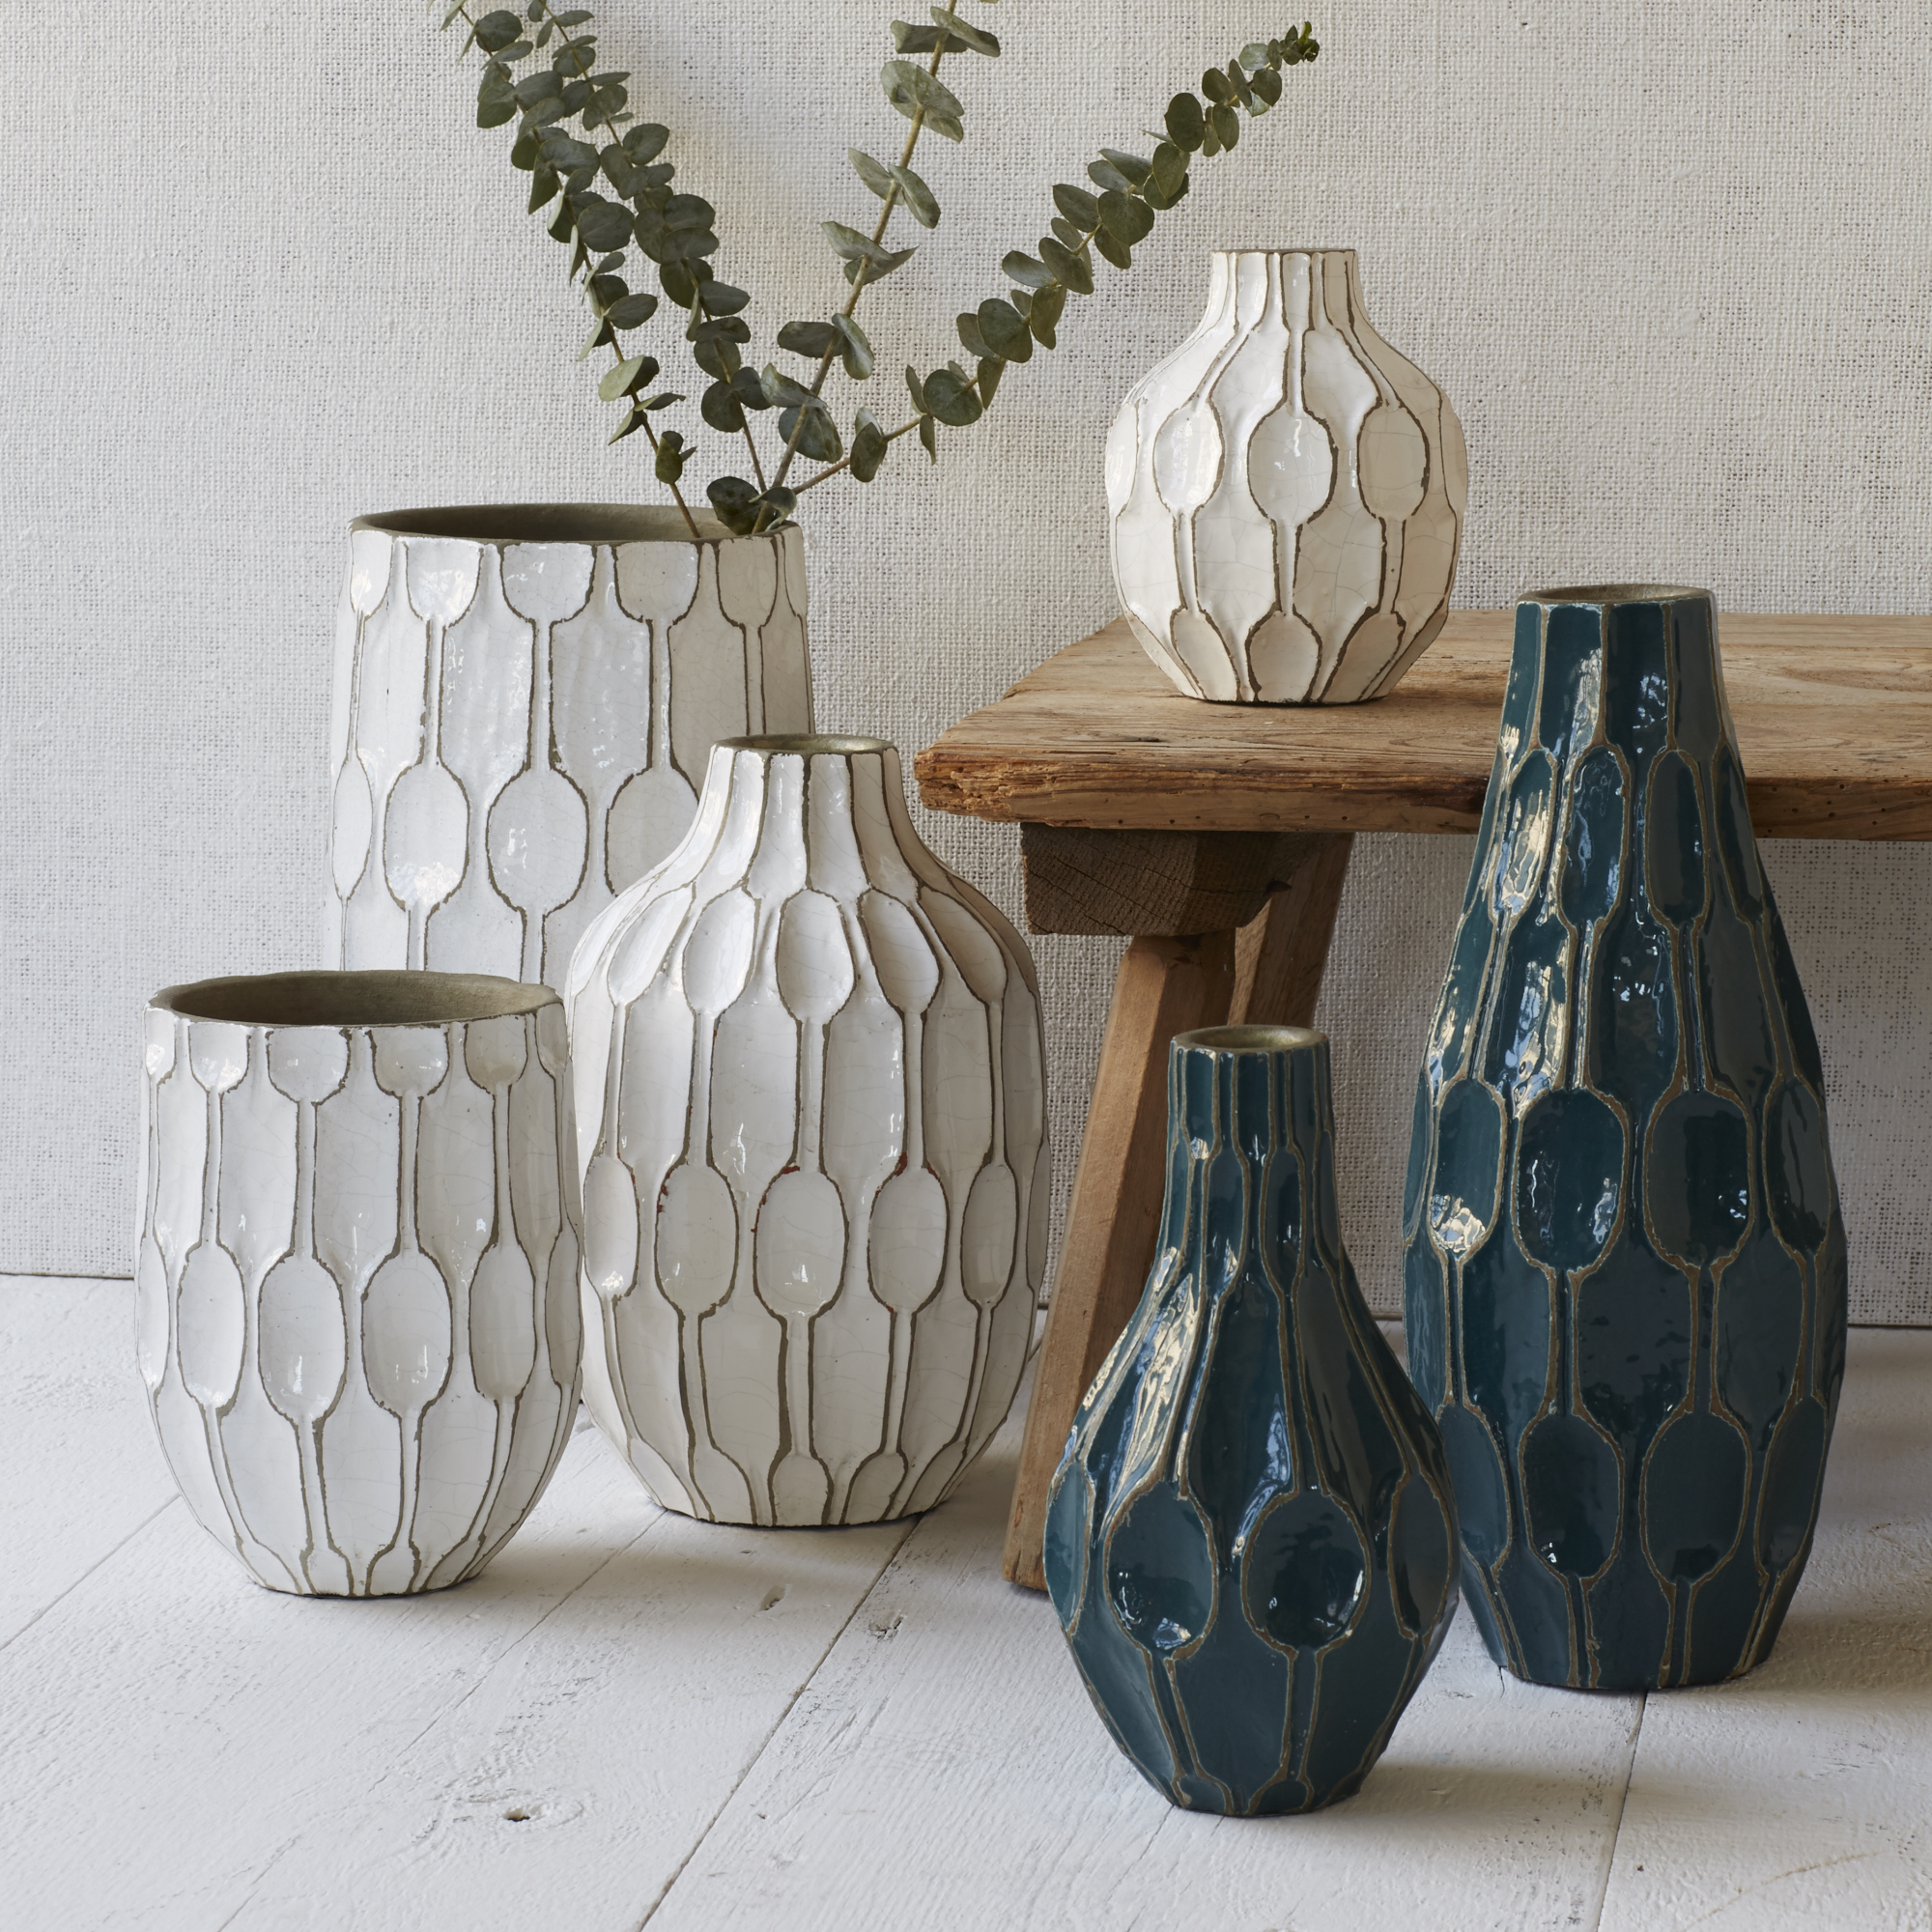 pip-linework-vases-white-blue-lagoon-honeycomb-fa14-071.jpg